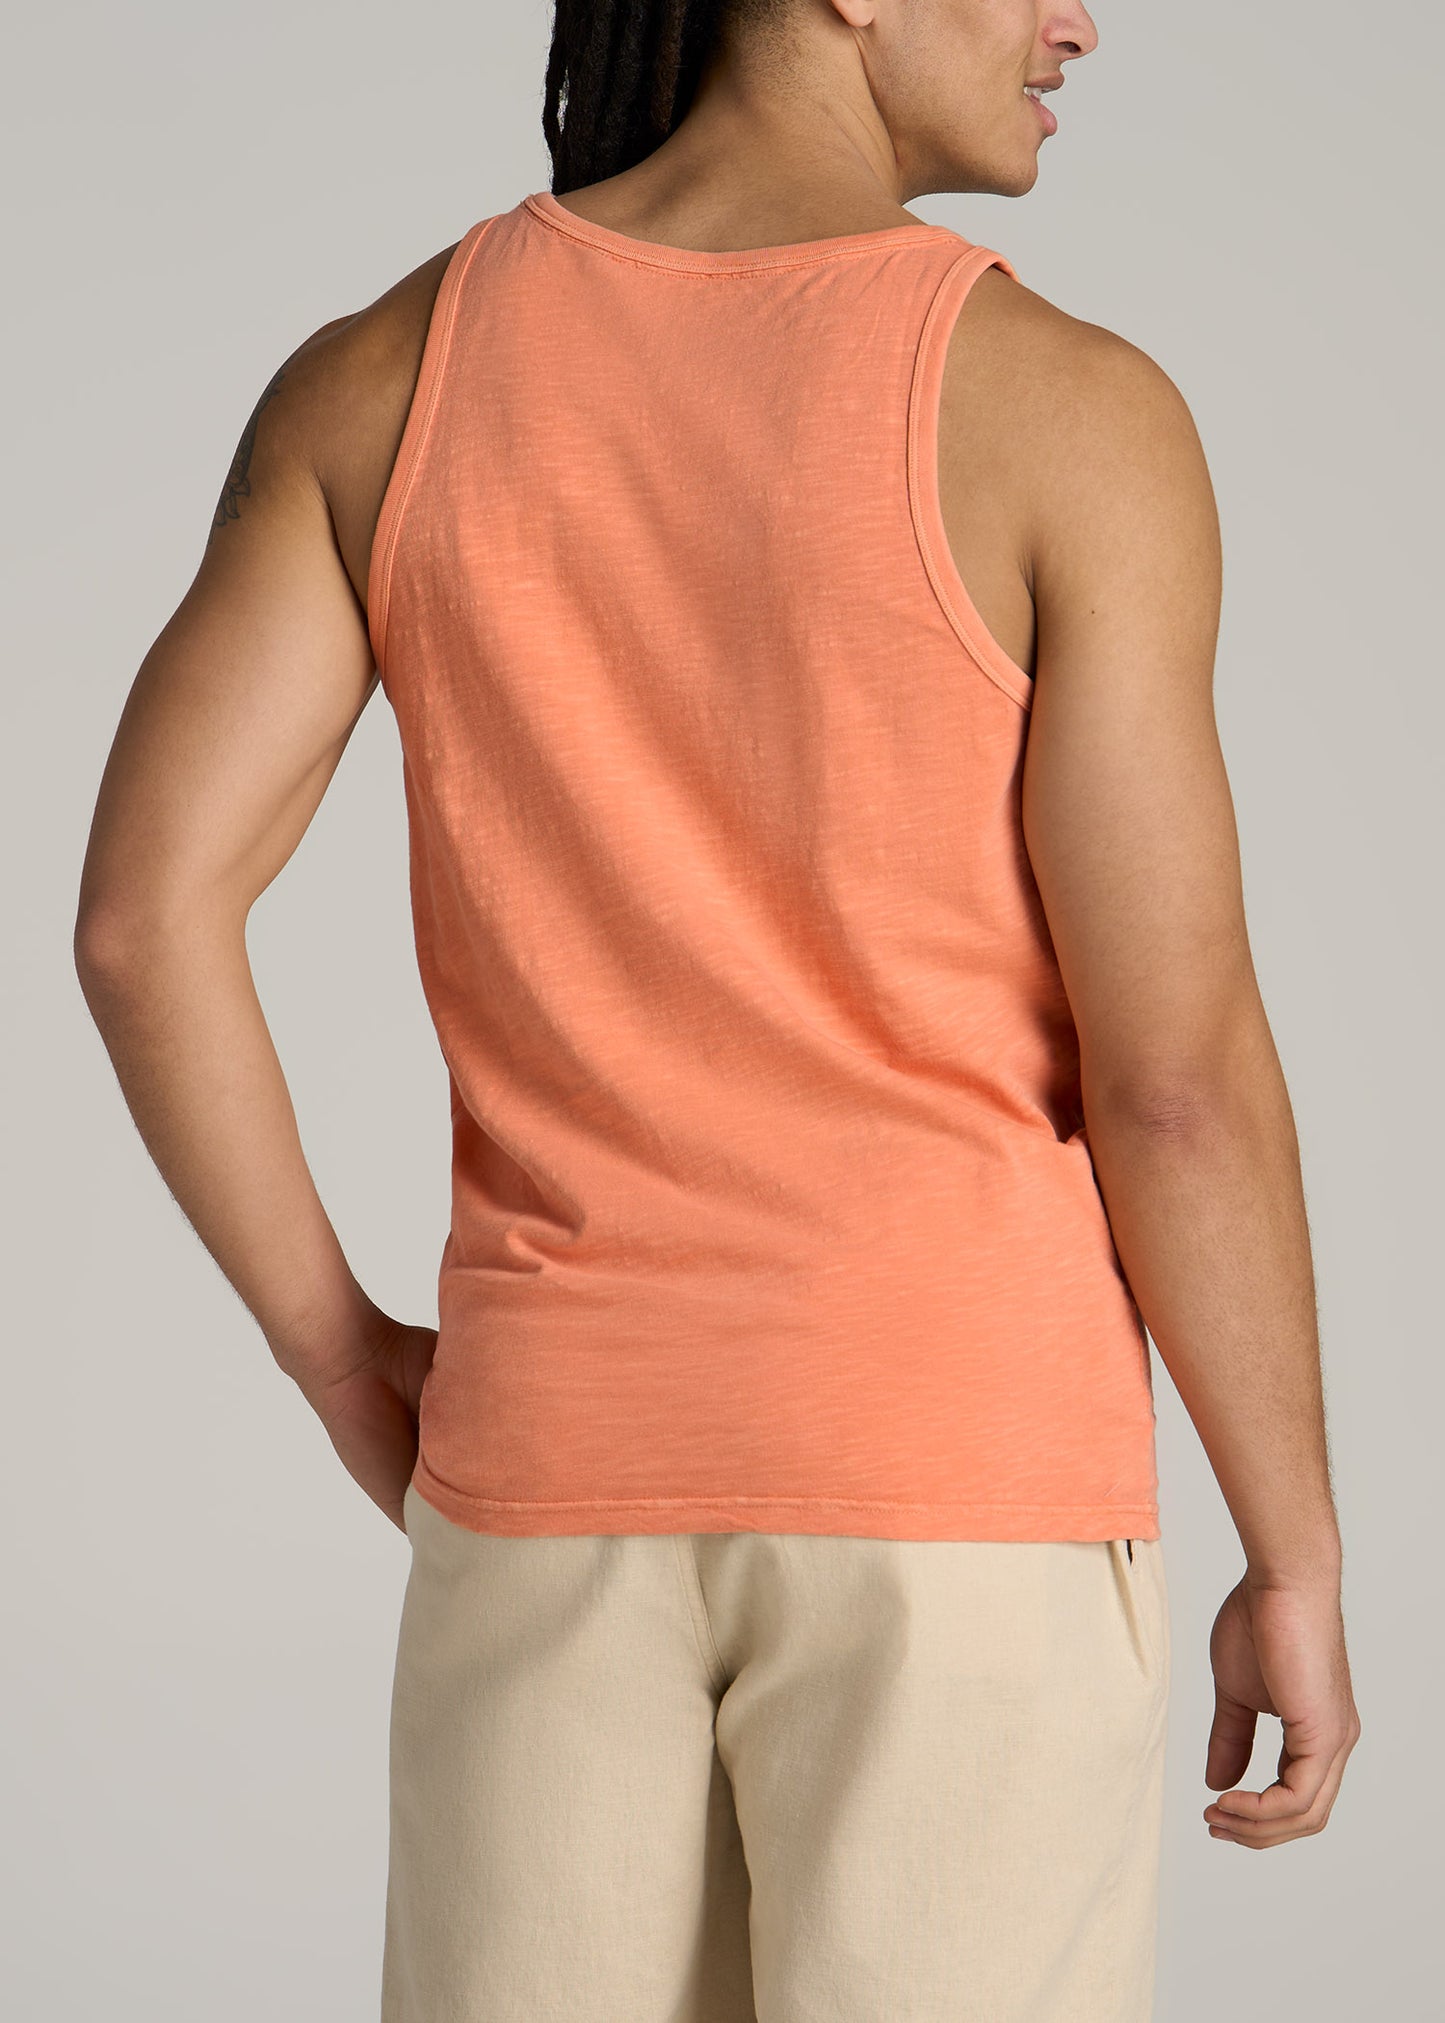 Garment Dyed Slub Pocket Tall Men's Tank Top in Apricot Crush